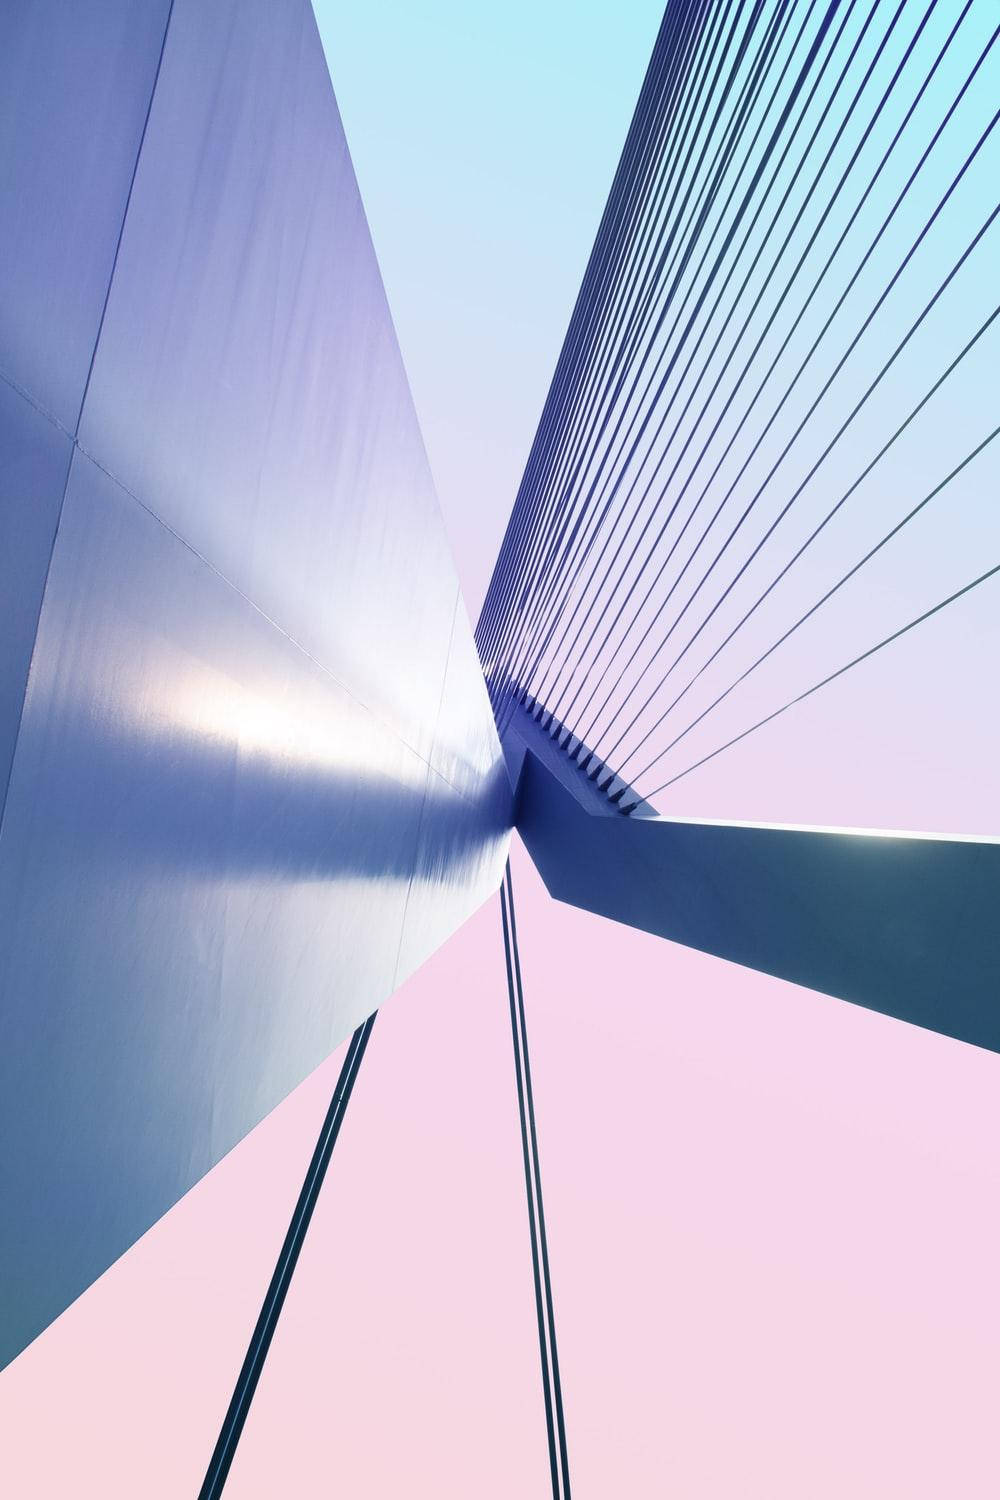 Cool Iphone Xs Max Bridge Architecture Background